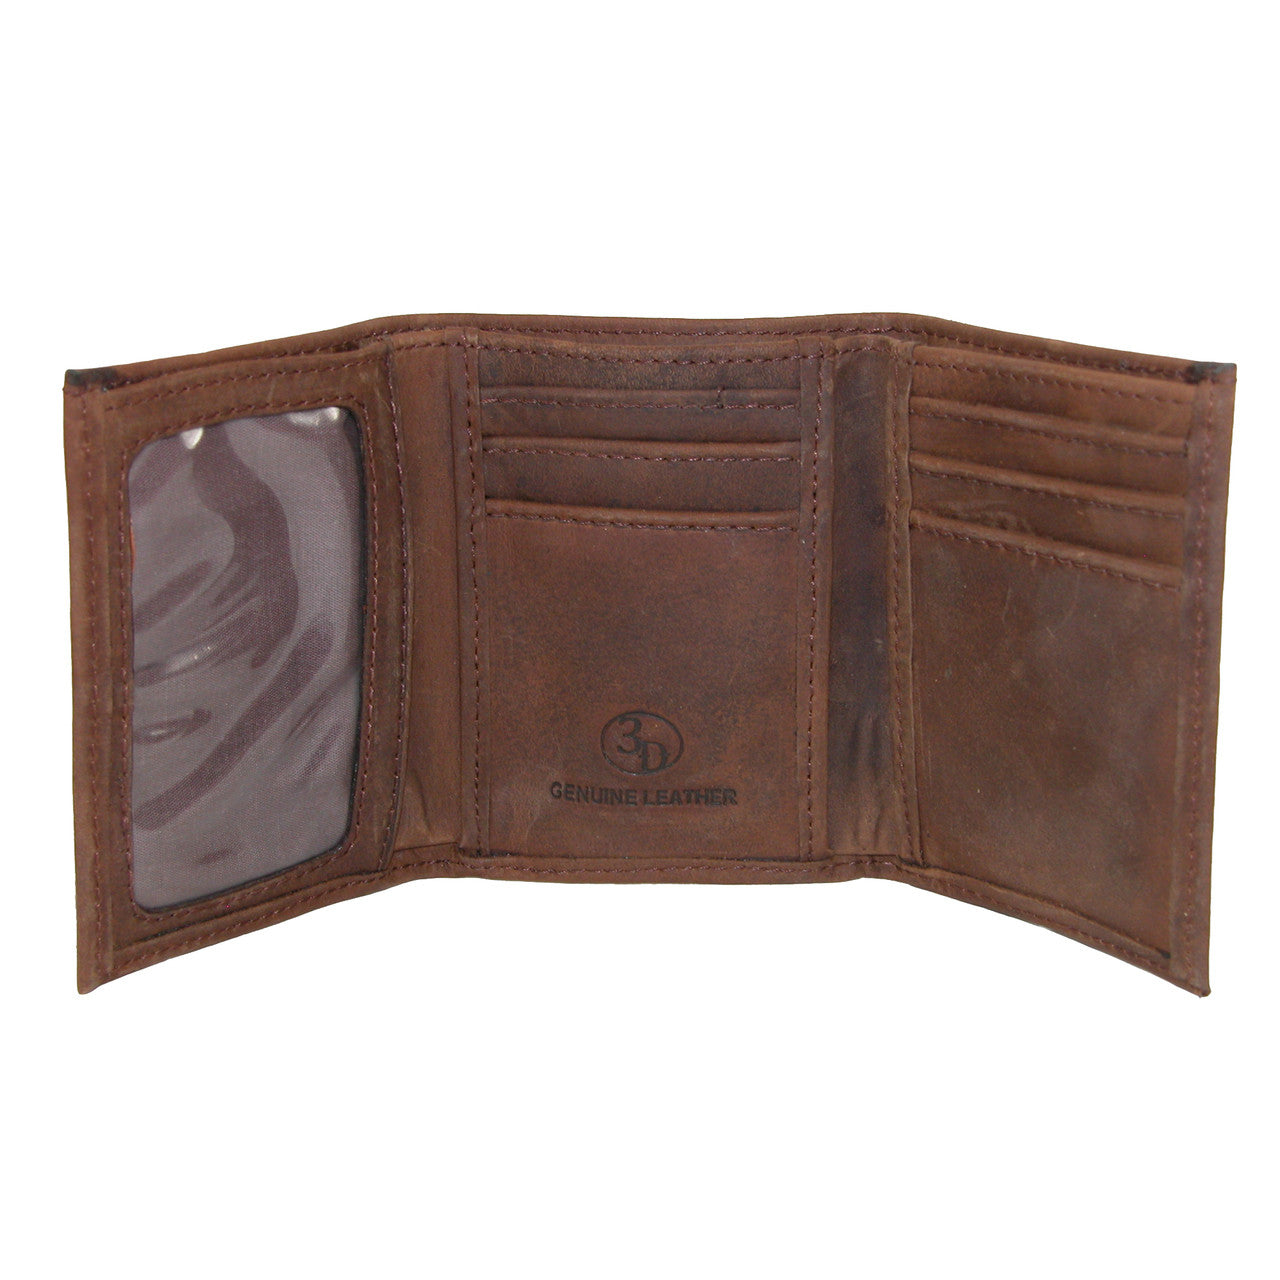 Men's 3D Leather Trifold Wallet by 3D Belt Company